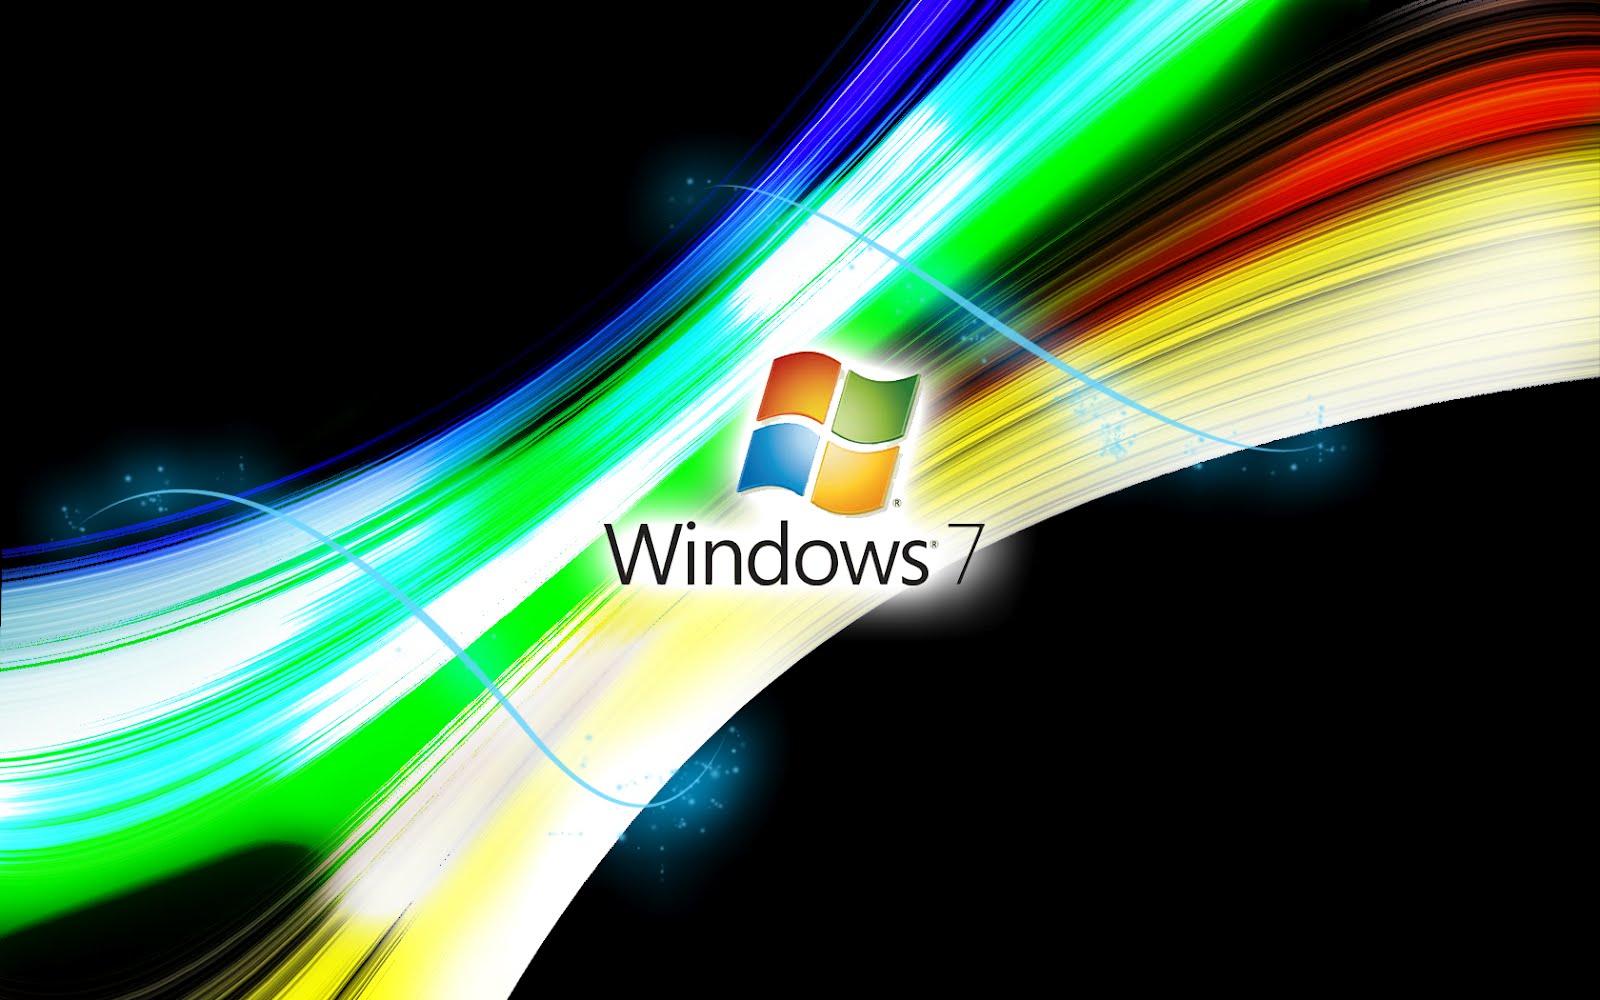 Windows 7 Wallpaper Freecomputer Wallpaper Free Wallpaper Downloads